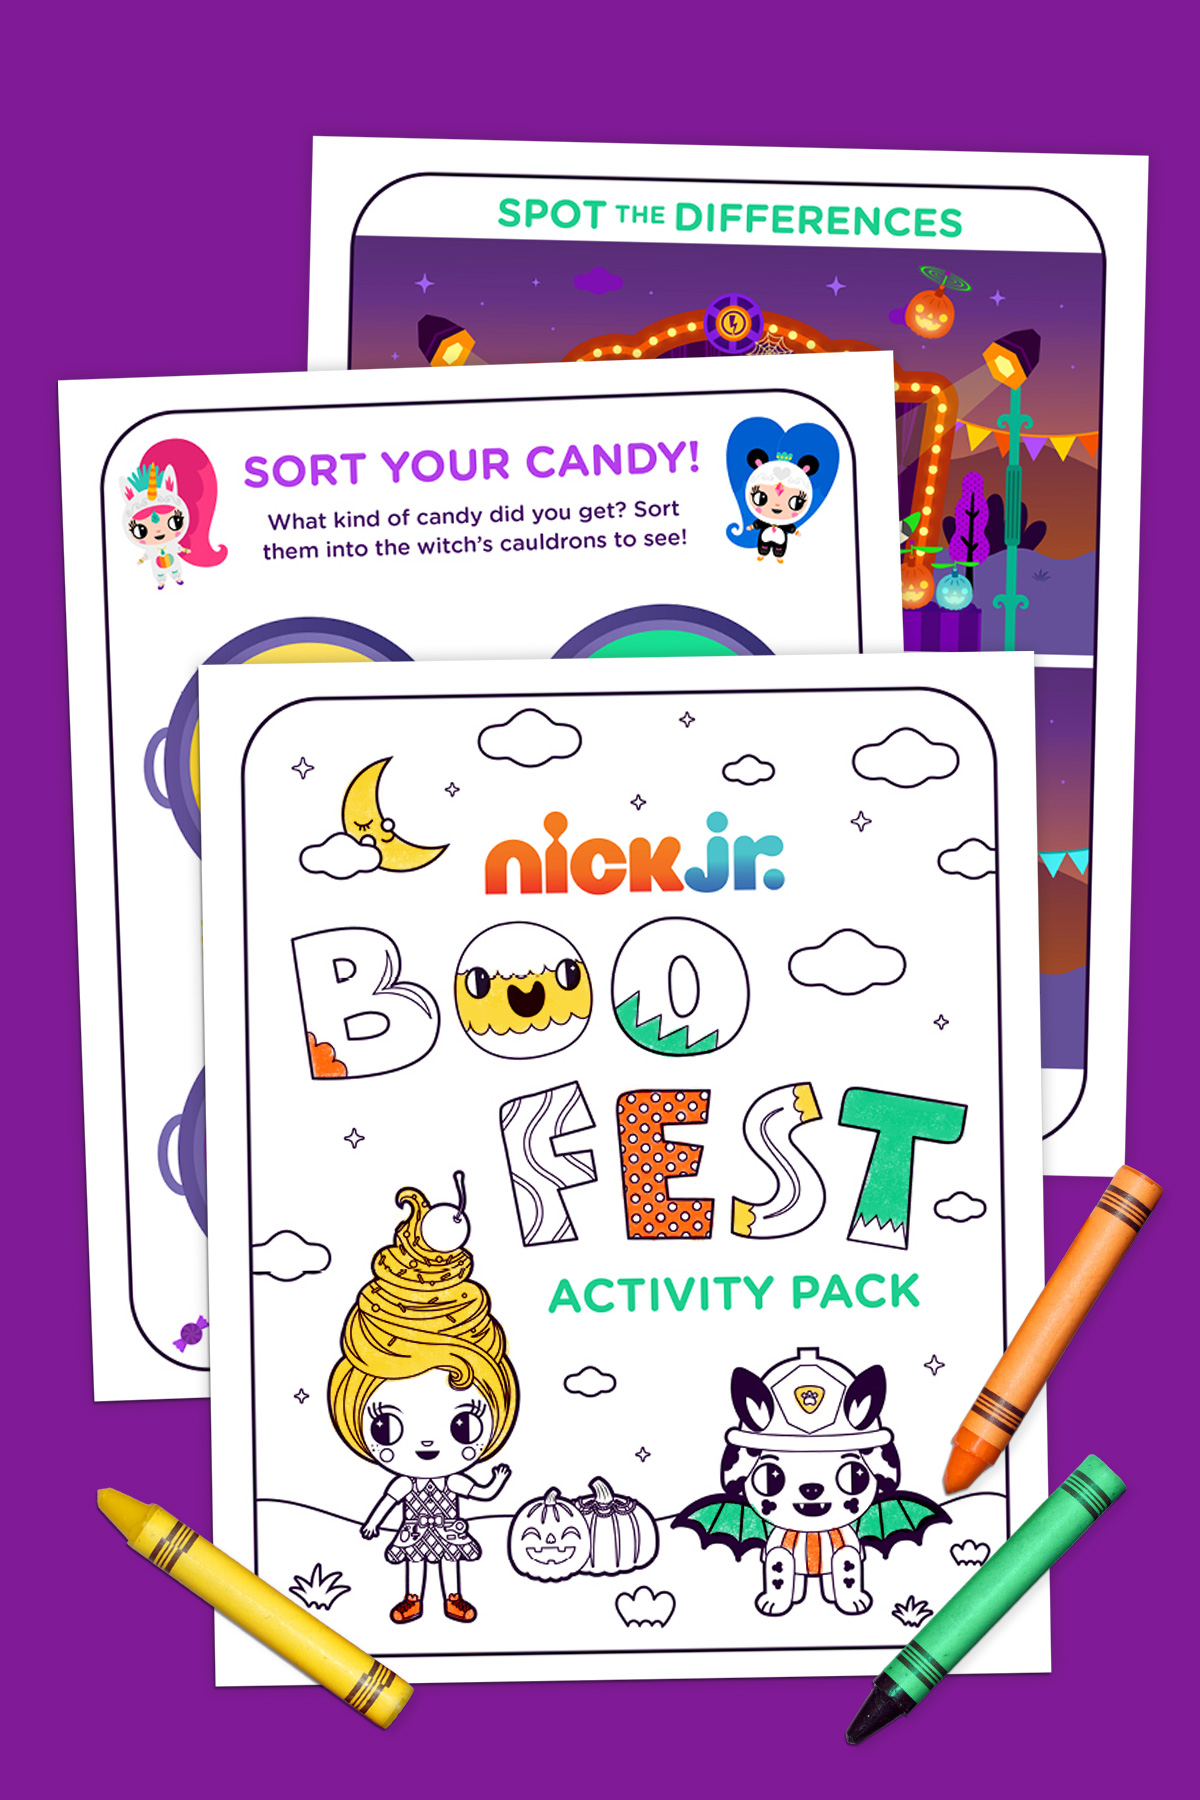 Nick Jr Boo Fest Activity Pack